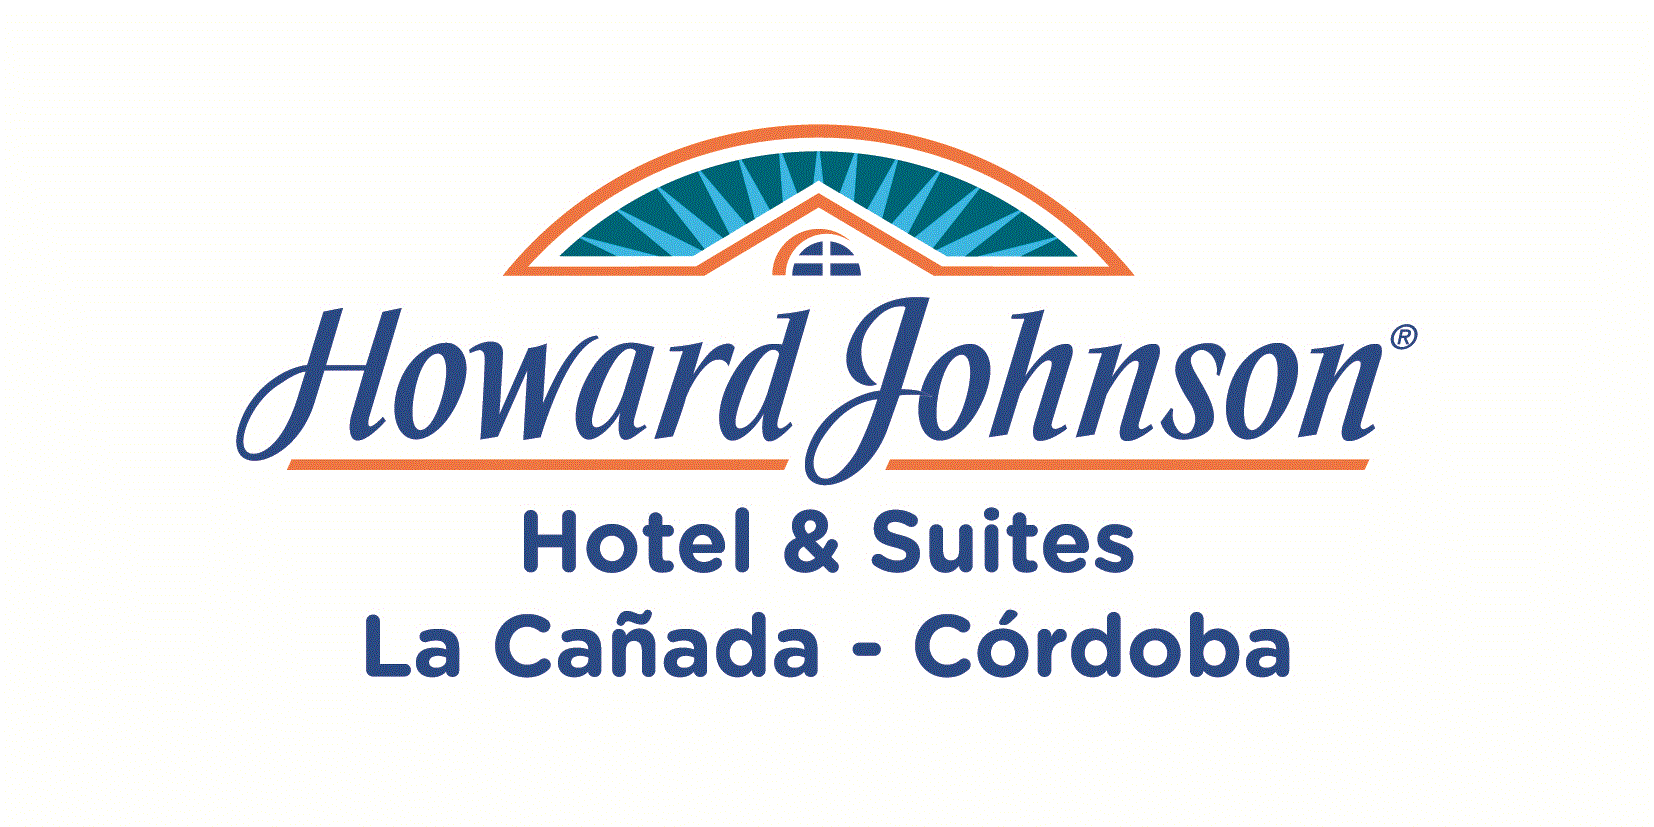 HOWARD JOHNSON Hotel & Suites